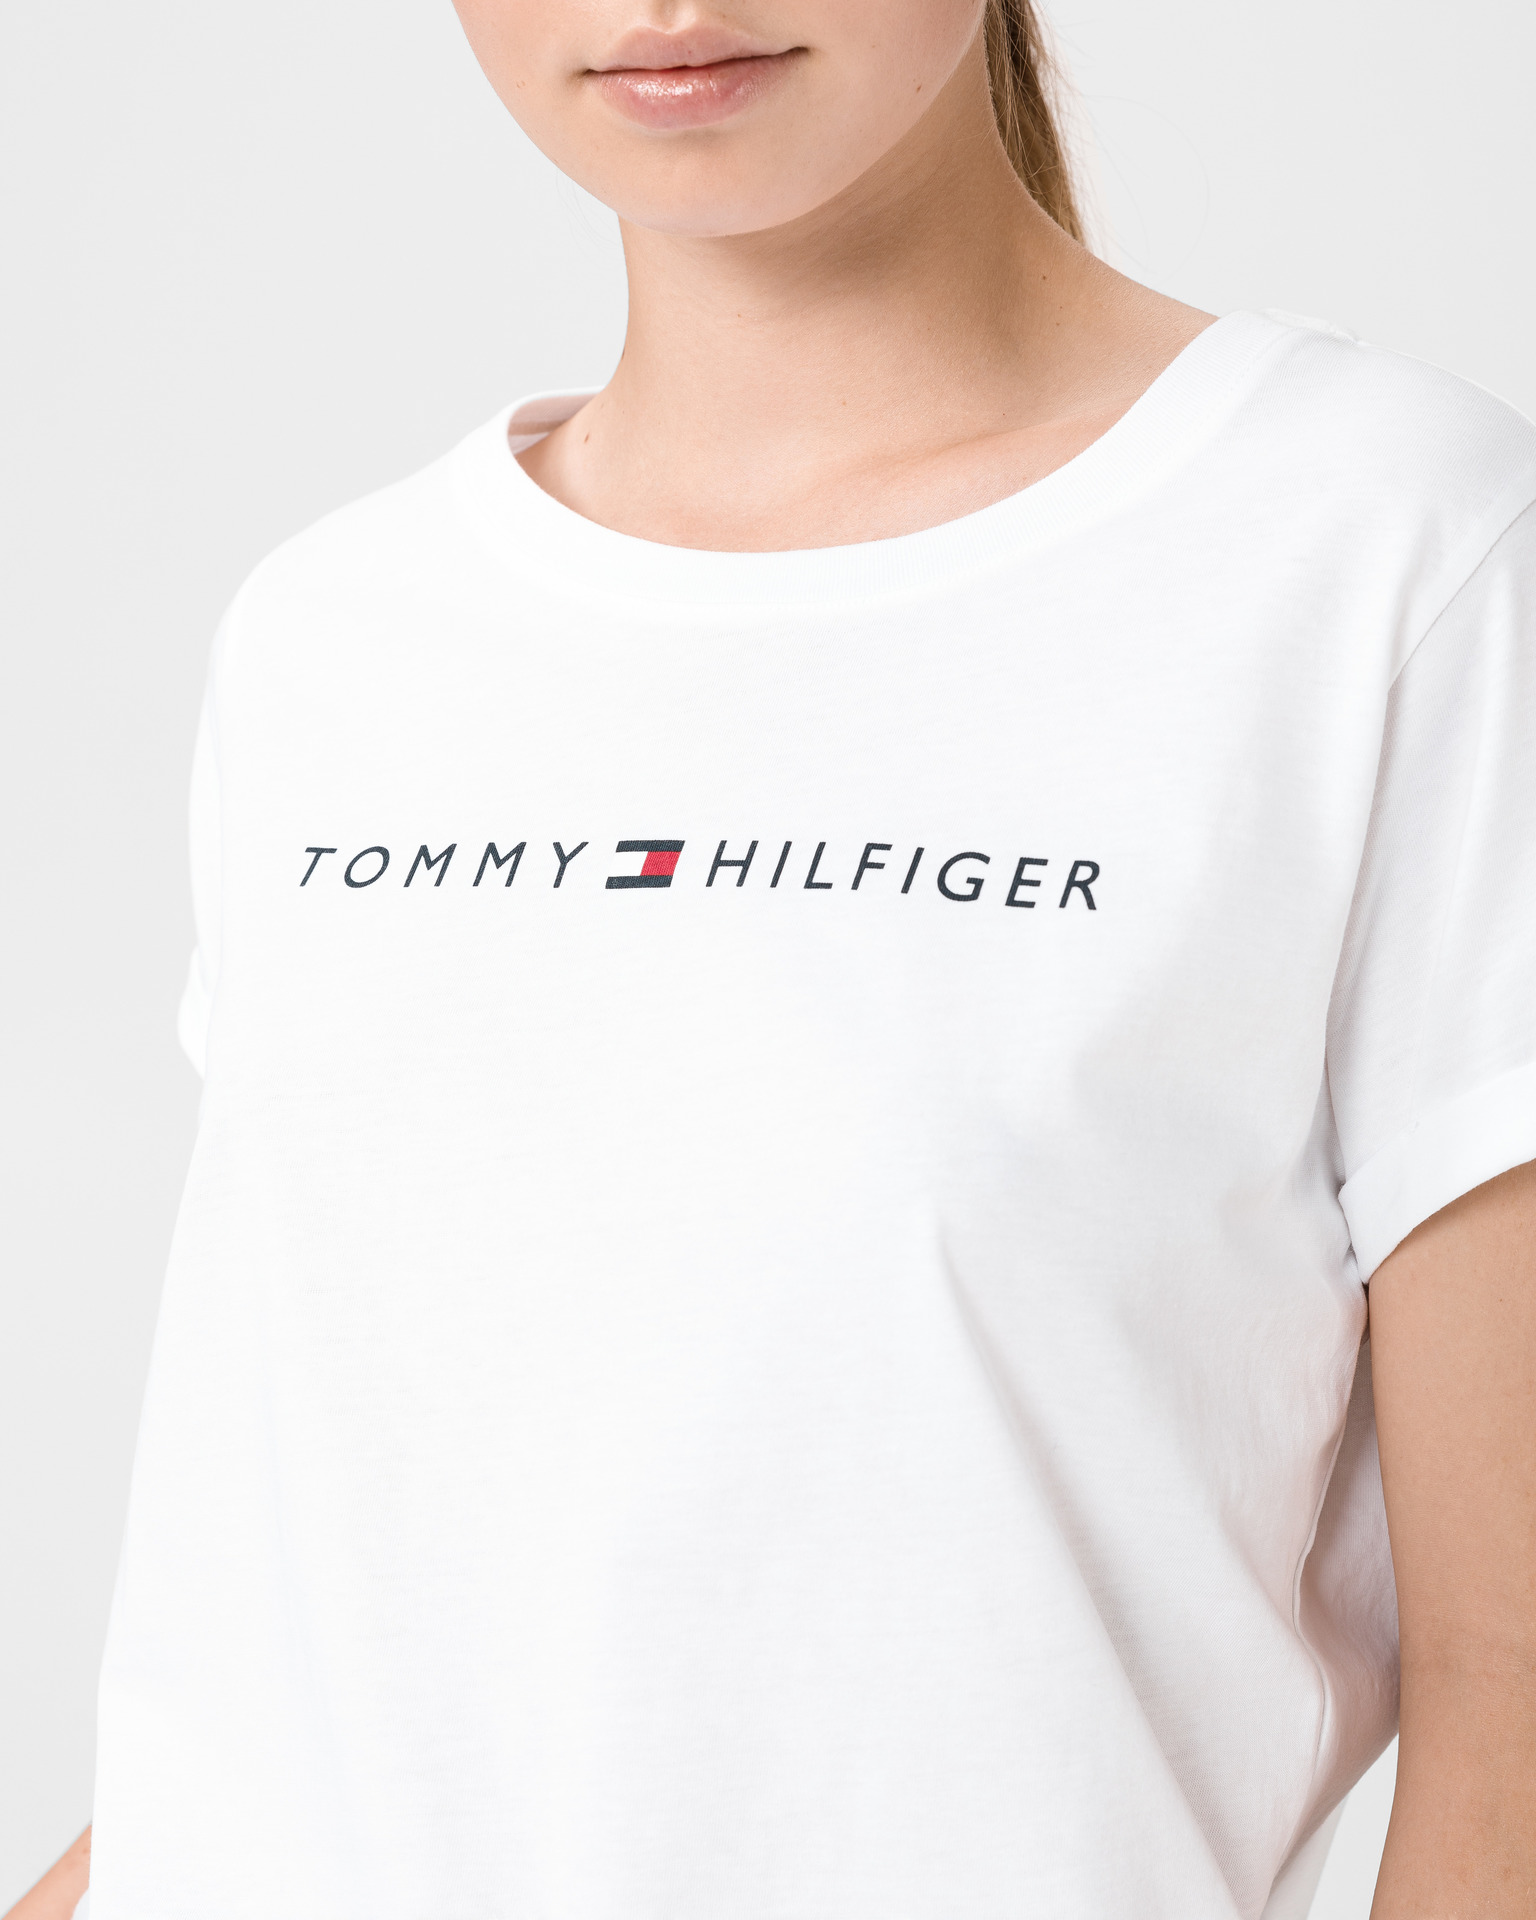 tommy hilfiger original logo t shirt